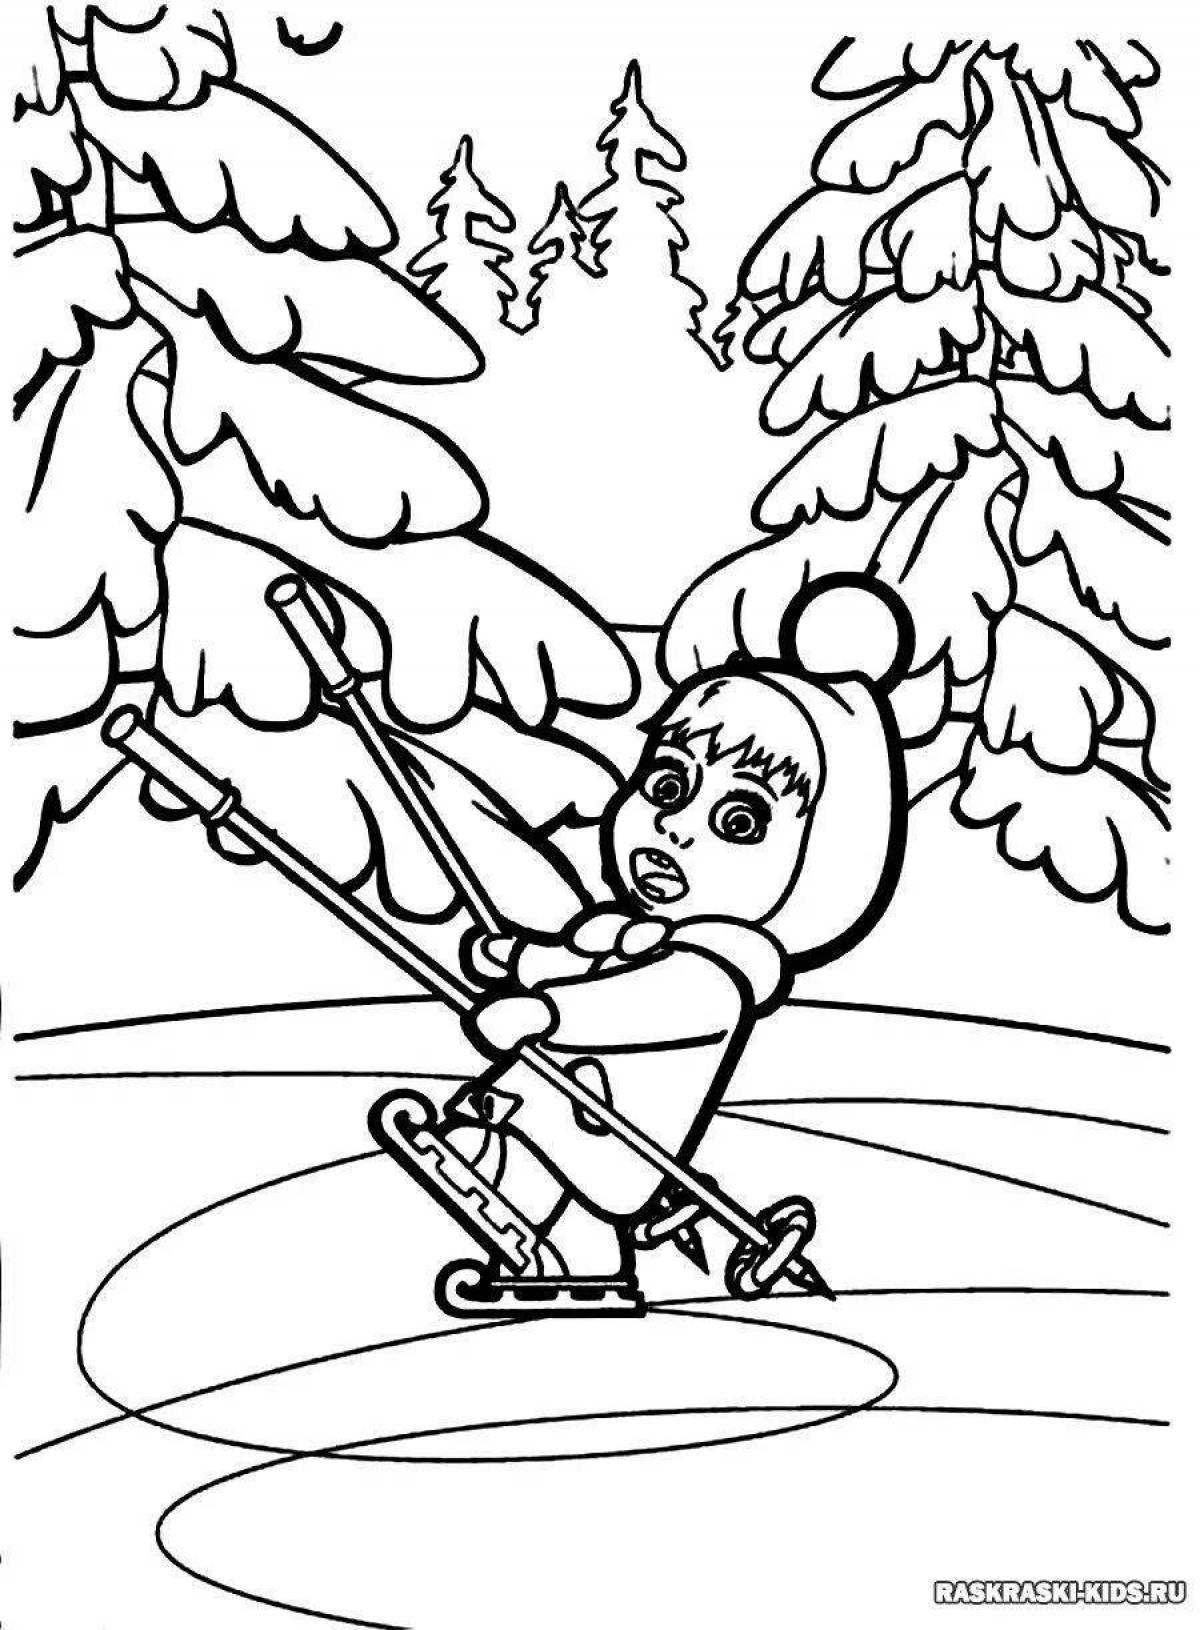 Coloring book shining bear on skis